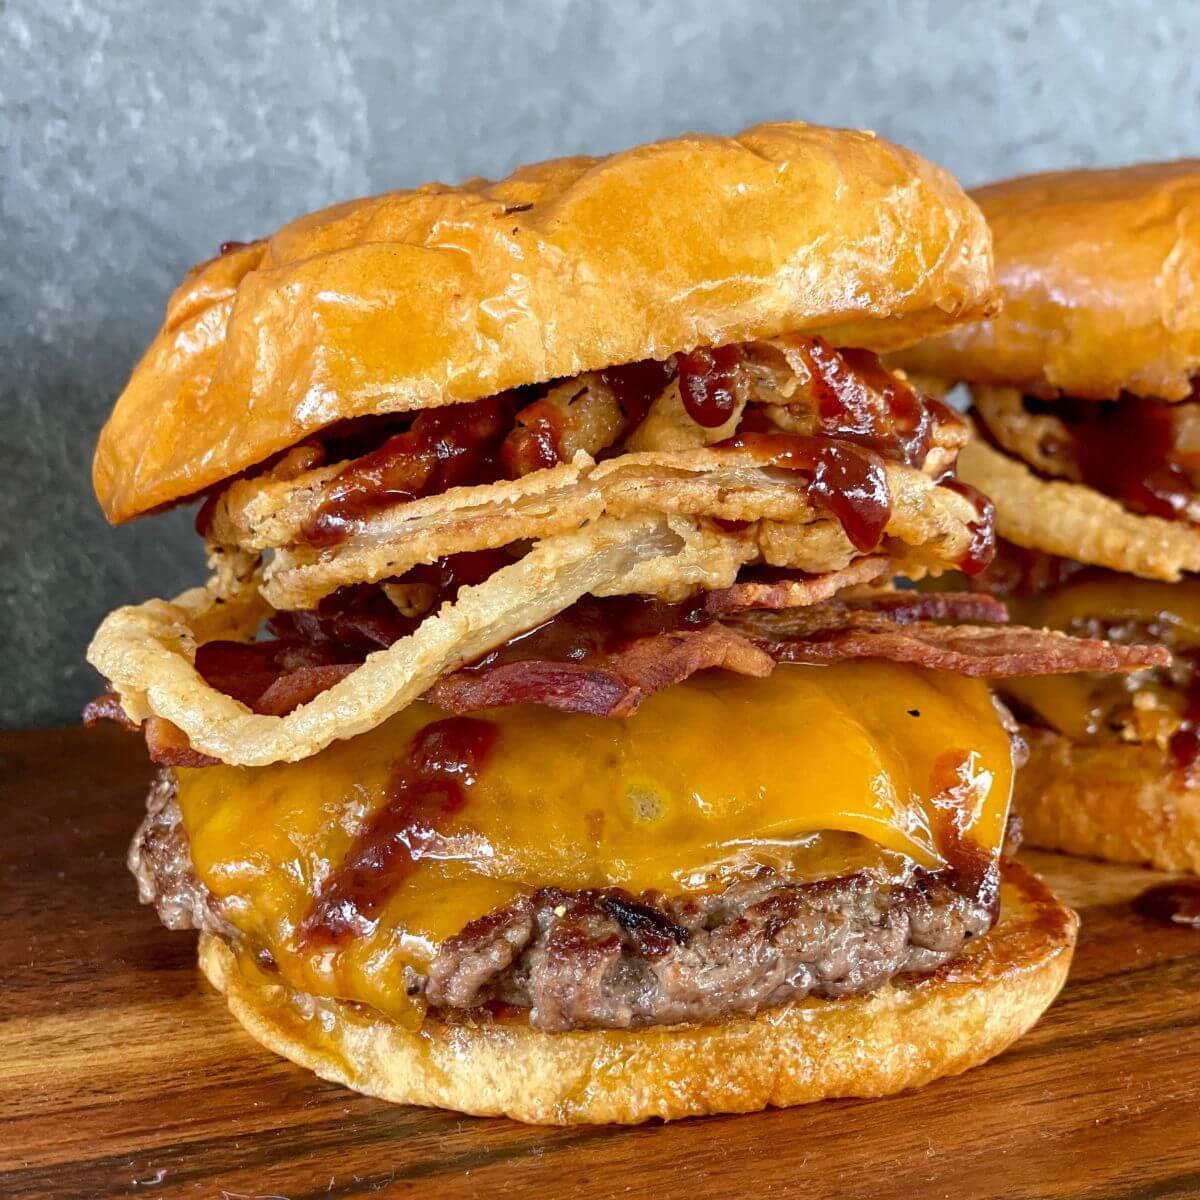 Basic smash burgers with weber gourmet burger seasoning and brioche buns :  r/blackstonegriddle